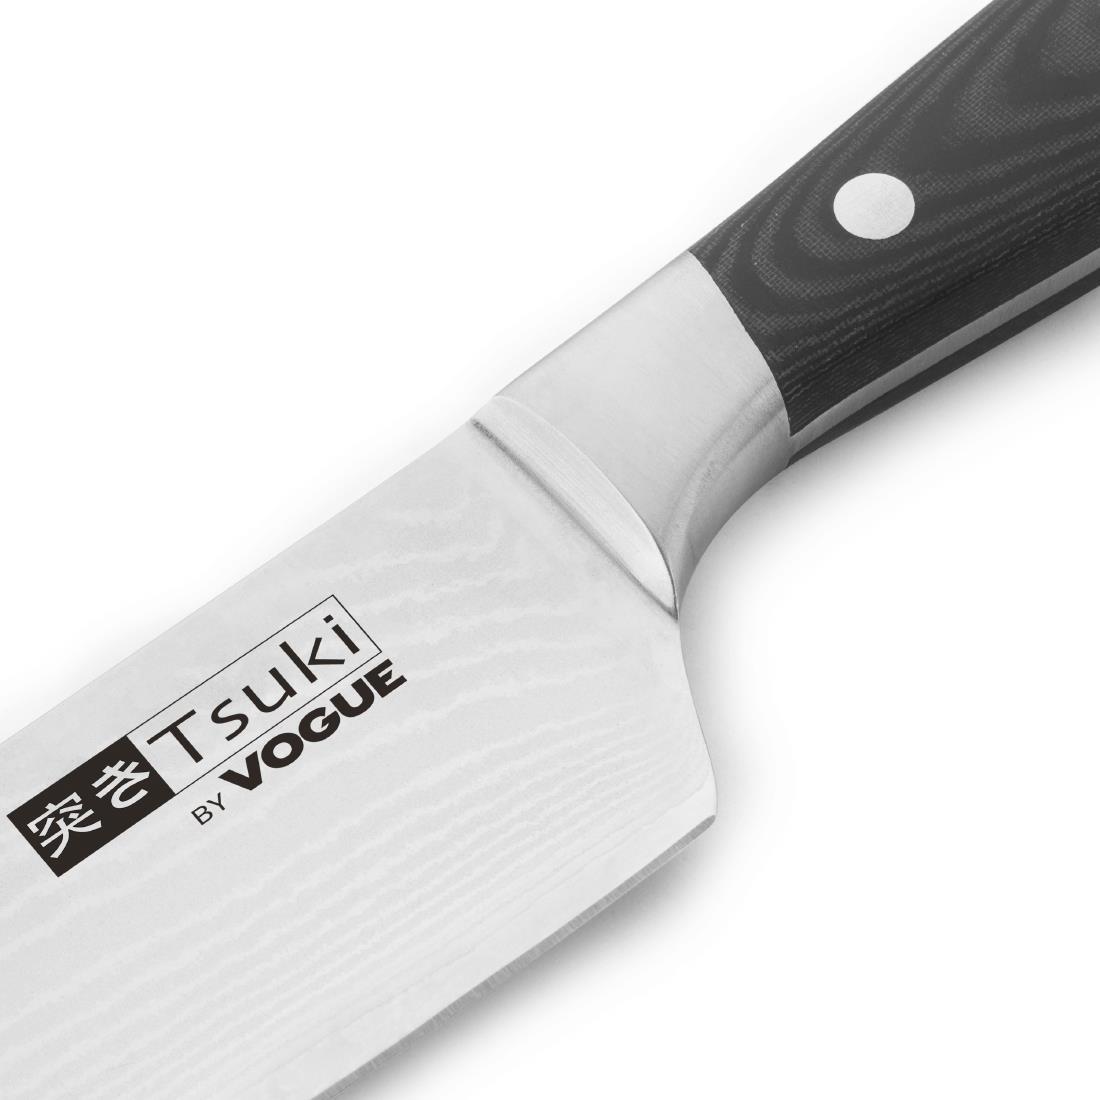 Vogue Tsuki Series 7 Chefs Knife 20.5cm - CF841  - 3